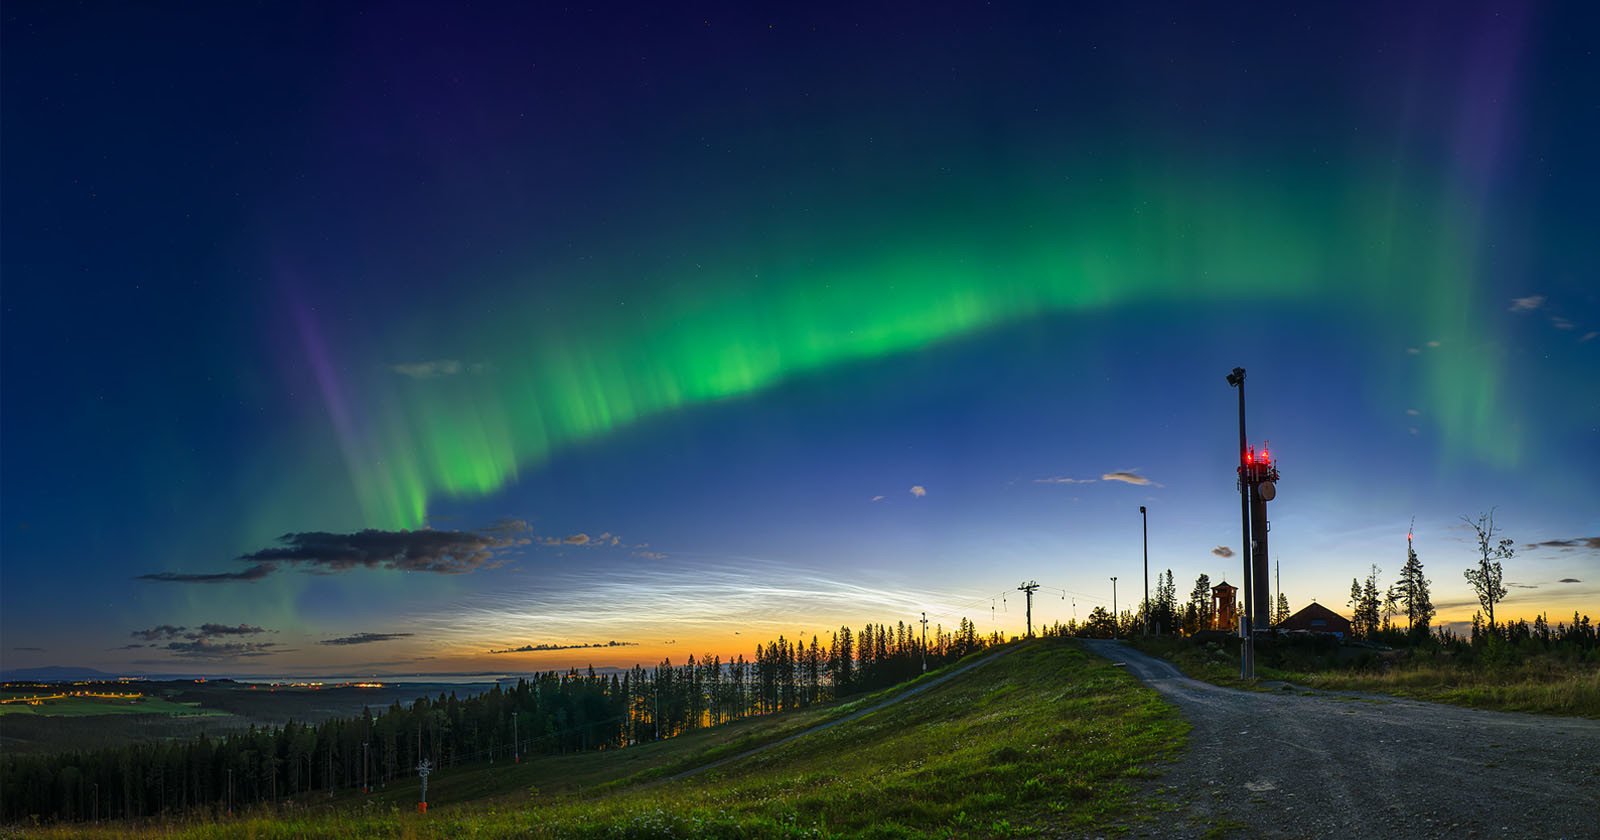 Rare Photo Captures Noctilucent Clouds and Aurora Borealis Together